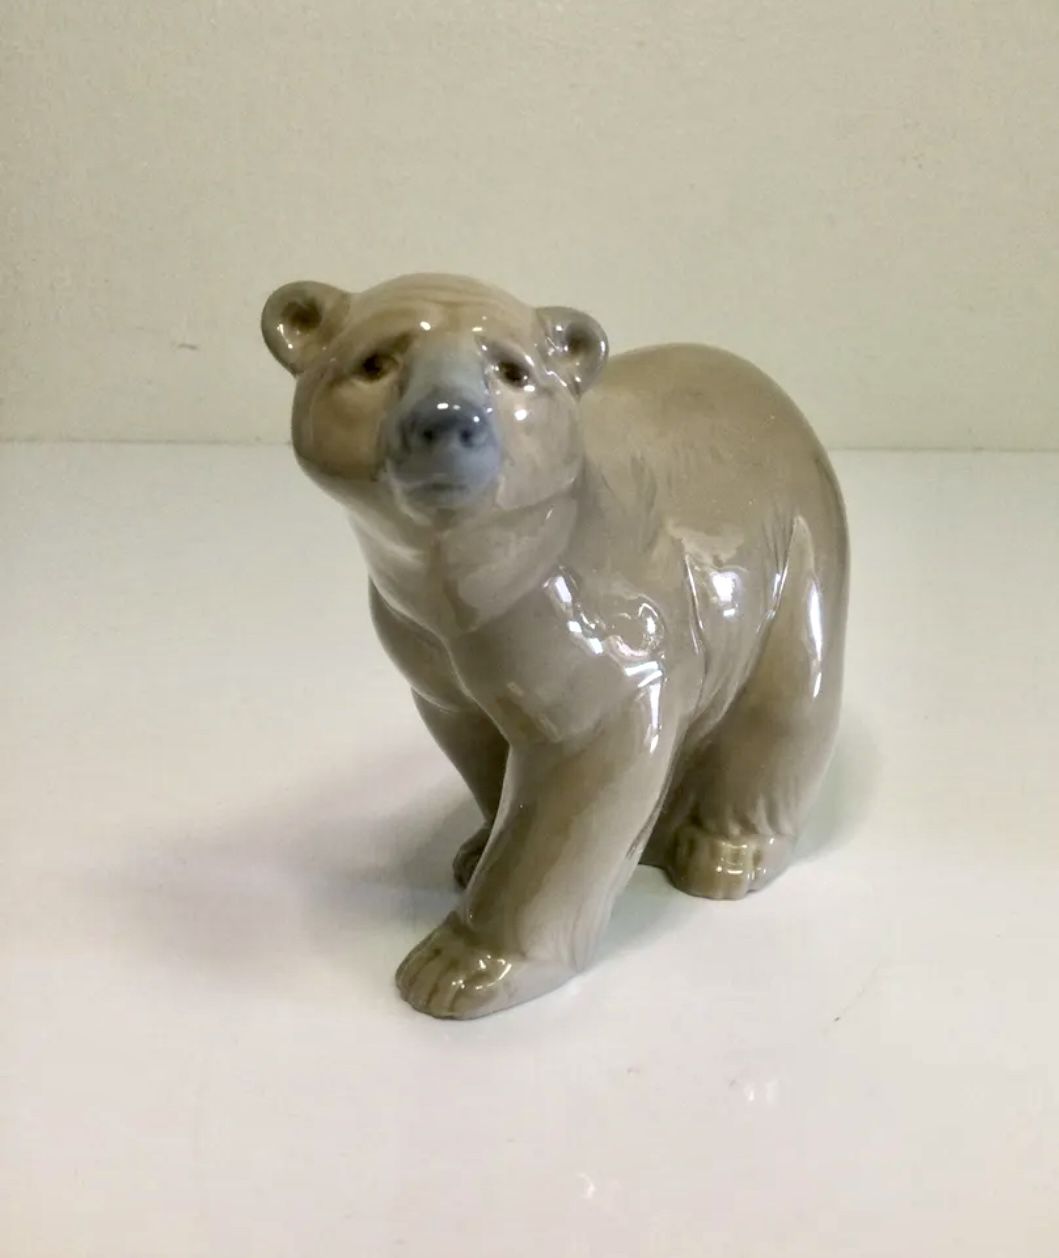 Vintage LLADRO Attentive Brown Bear Figurine #1204